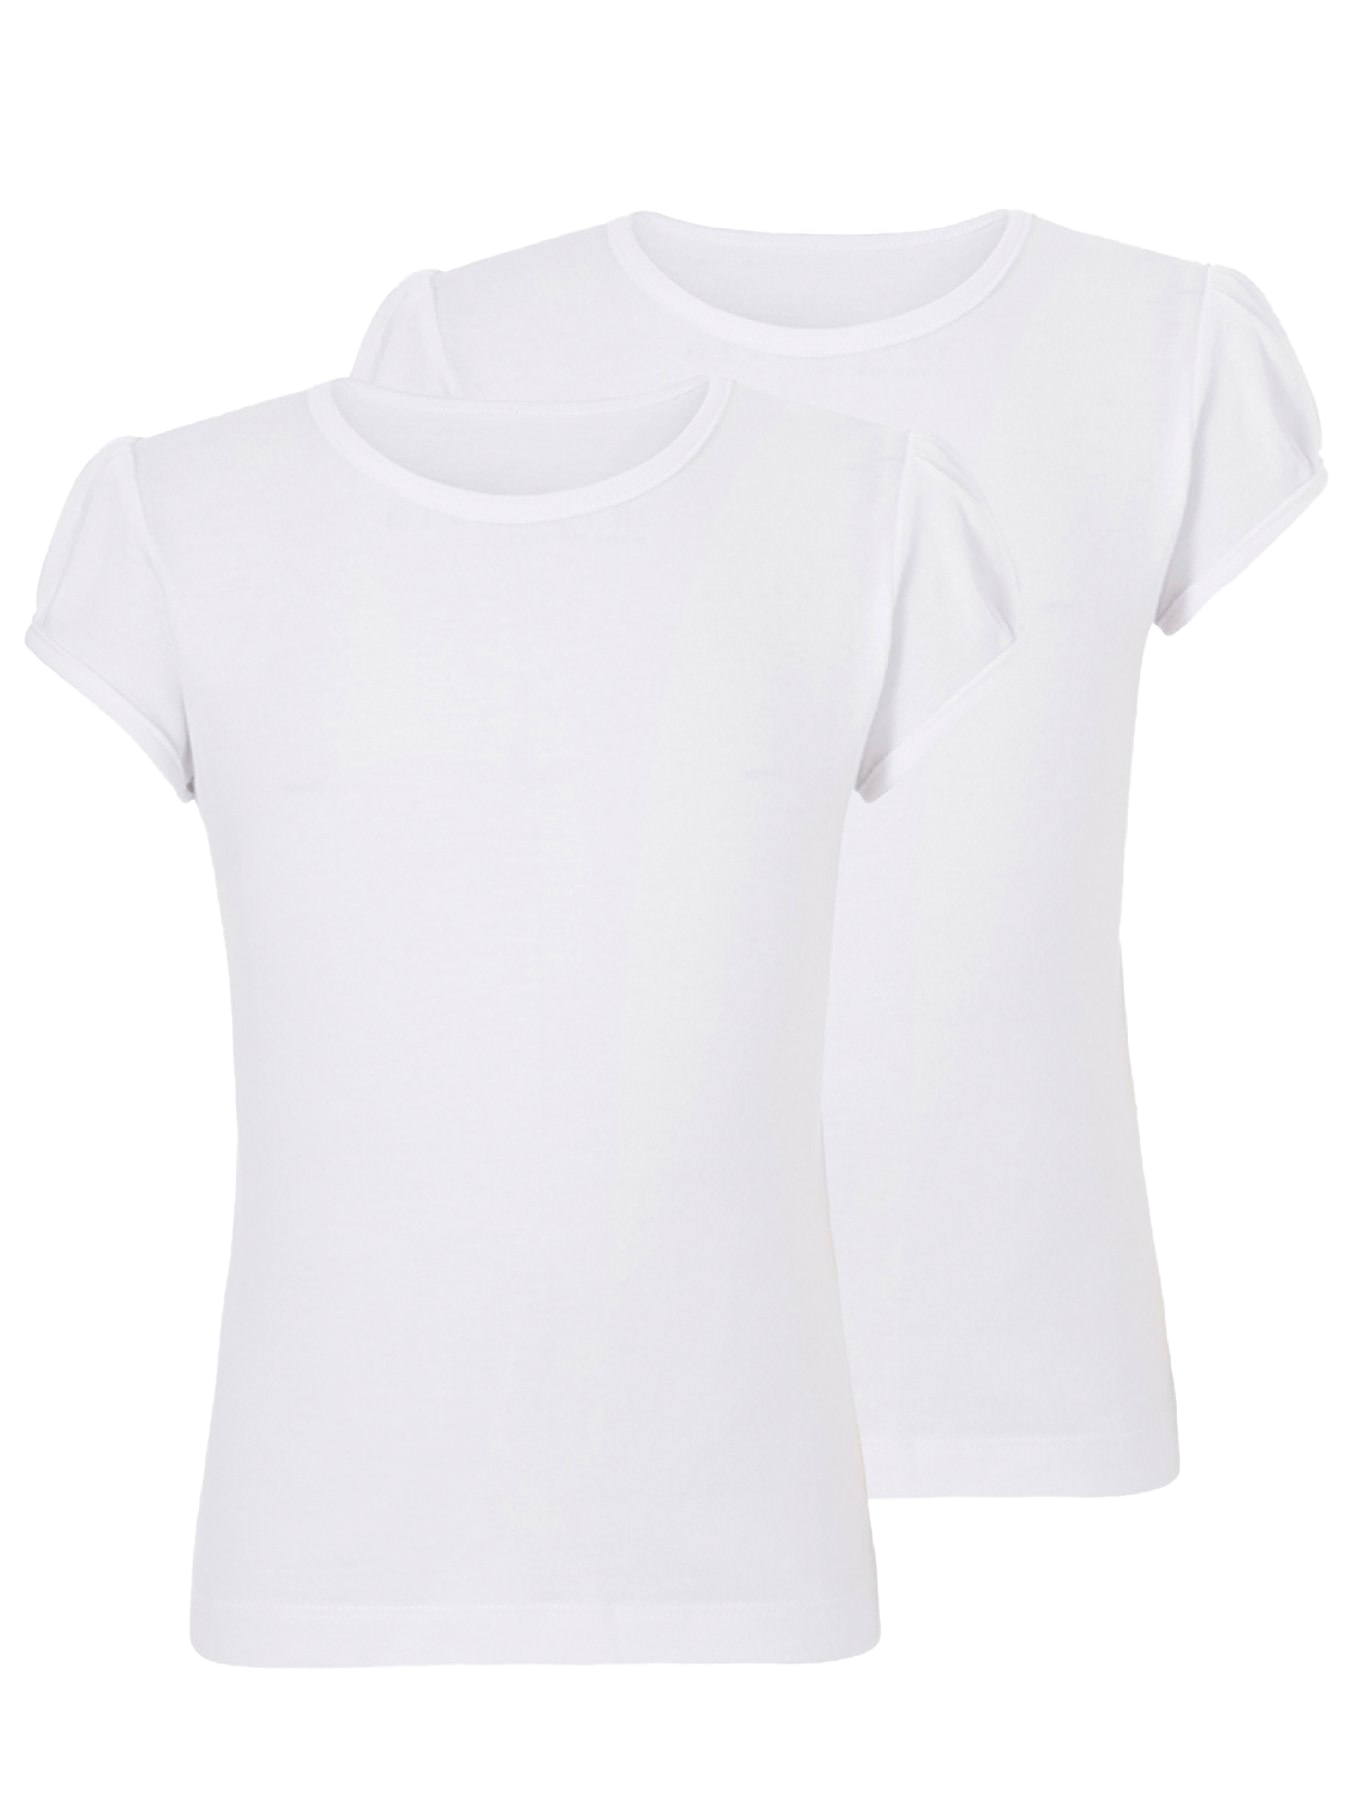 Plain White T-Shirt PNG Download Image